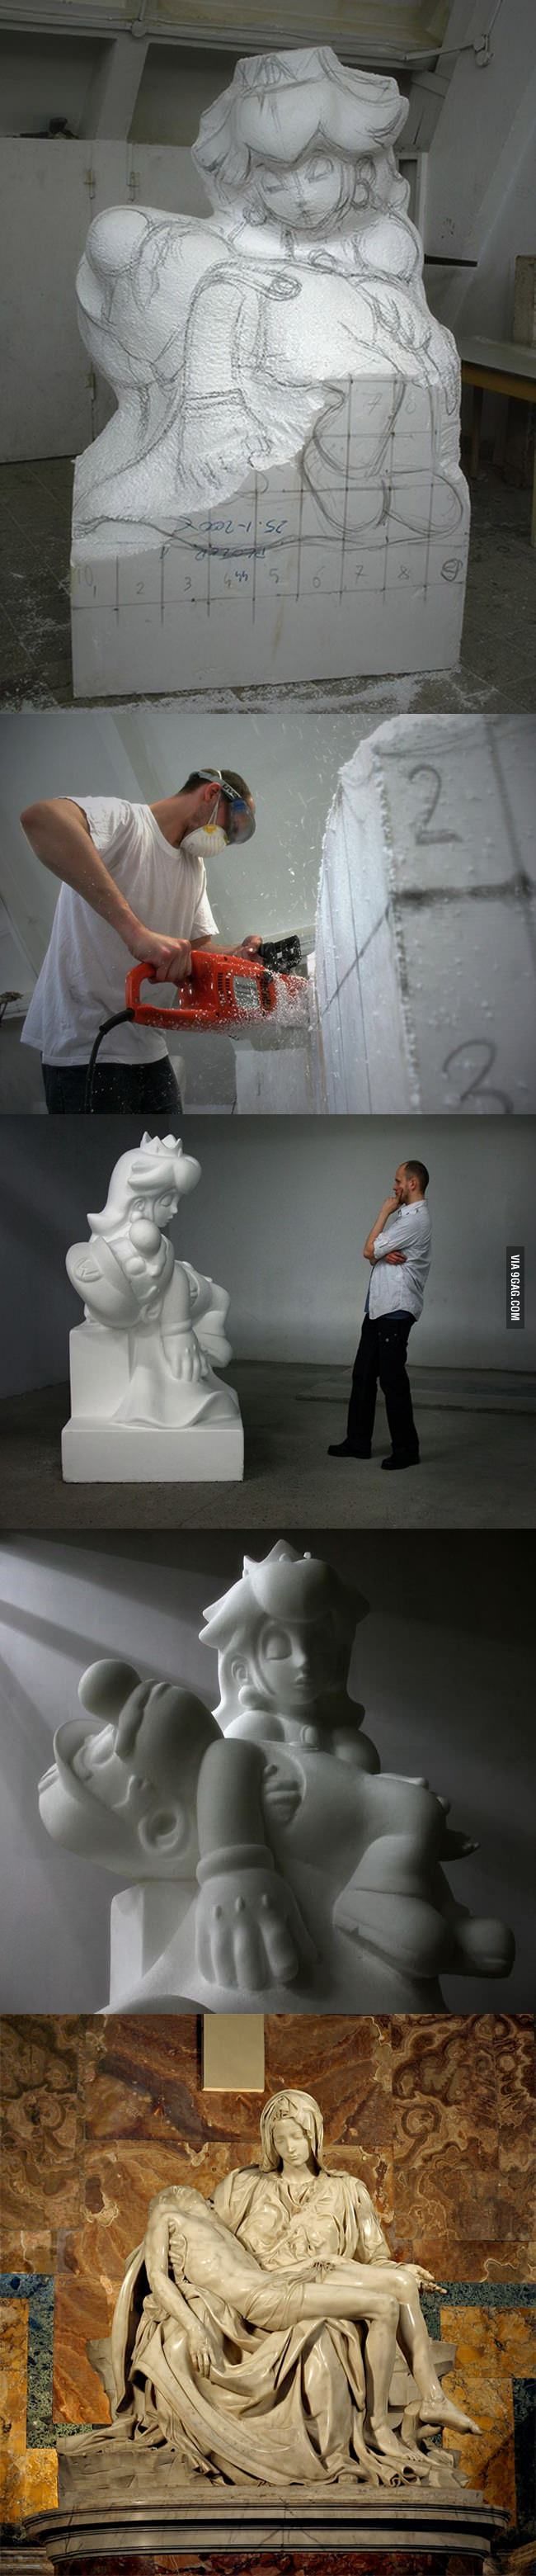 Game Over sculpture by Kordian Lewandowski